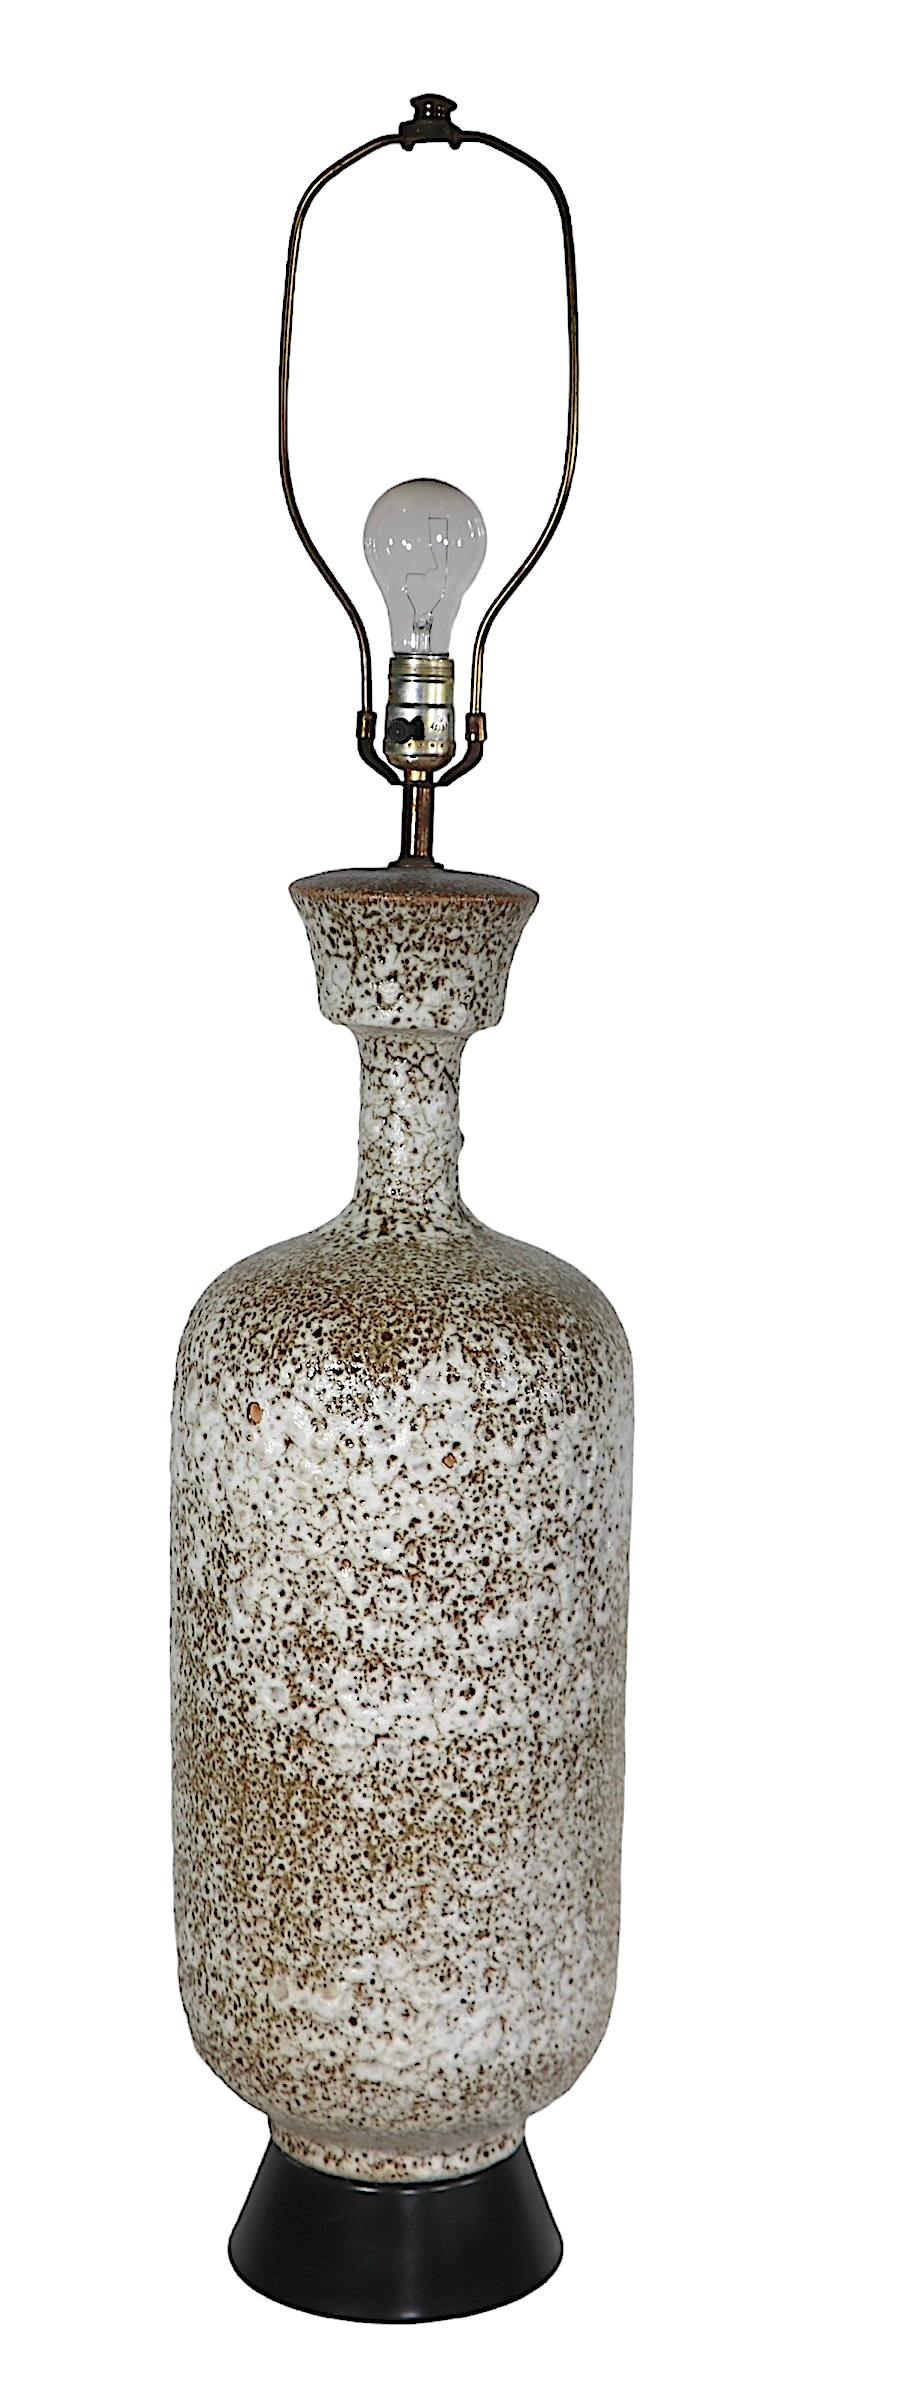 Oversize Hollywood Regency Mid Century Volcanic Glaze Table Lamp c 1950/1960's For Sale 4